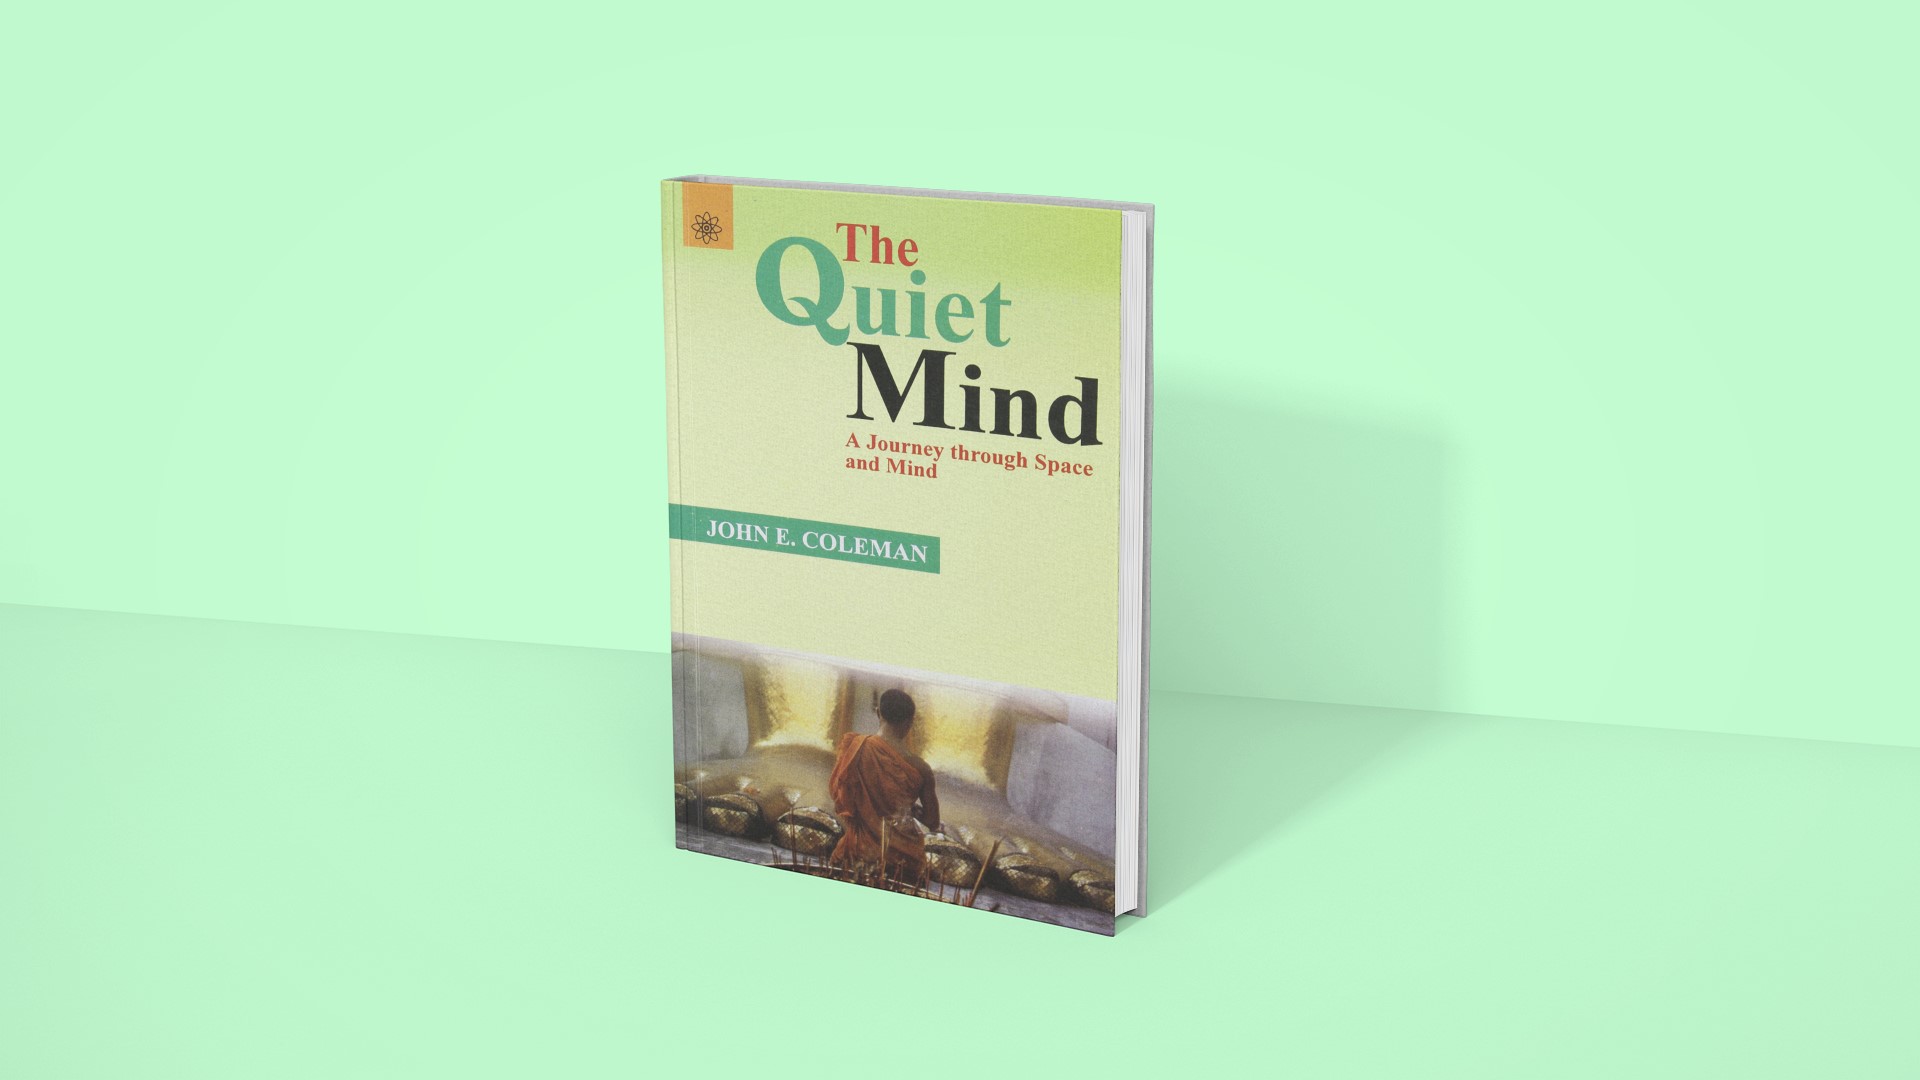 The Quiet Mind - John E. Coleman